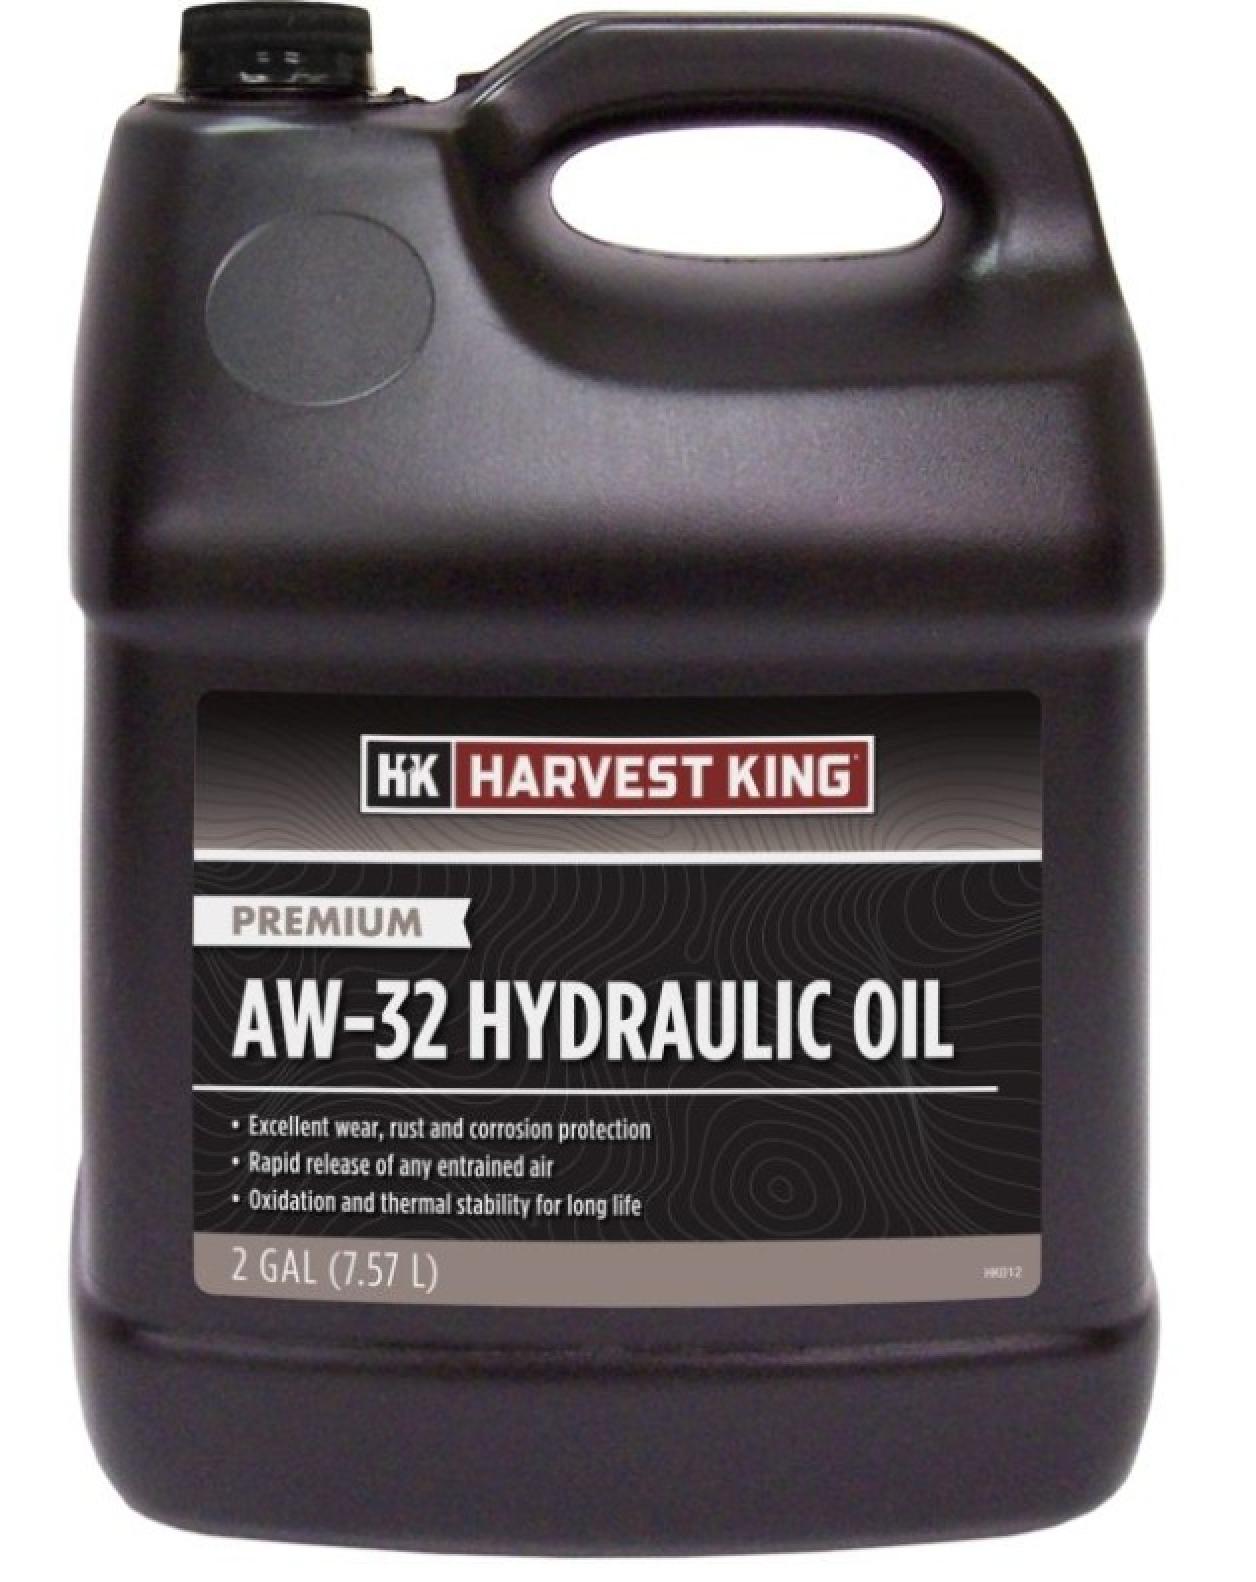 Harvest King Premium AW-32 Hydraulic Oil